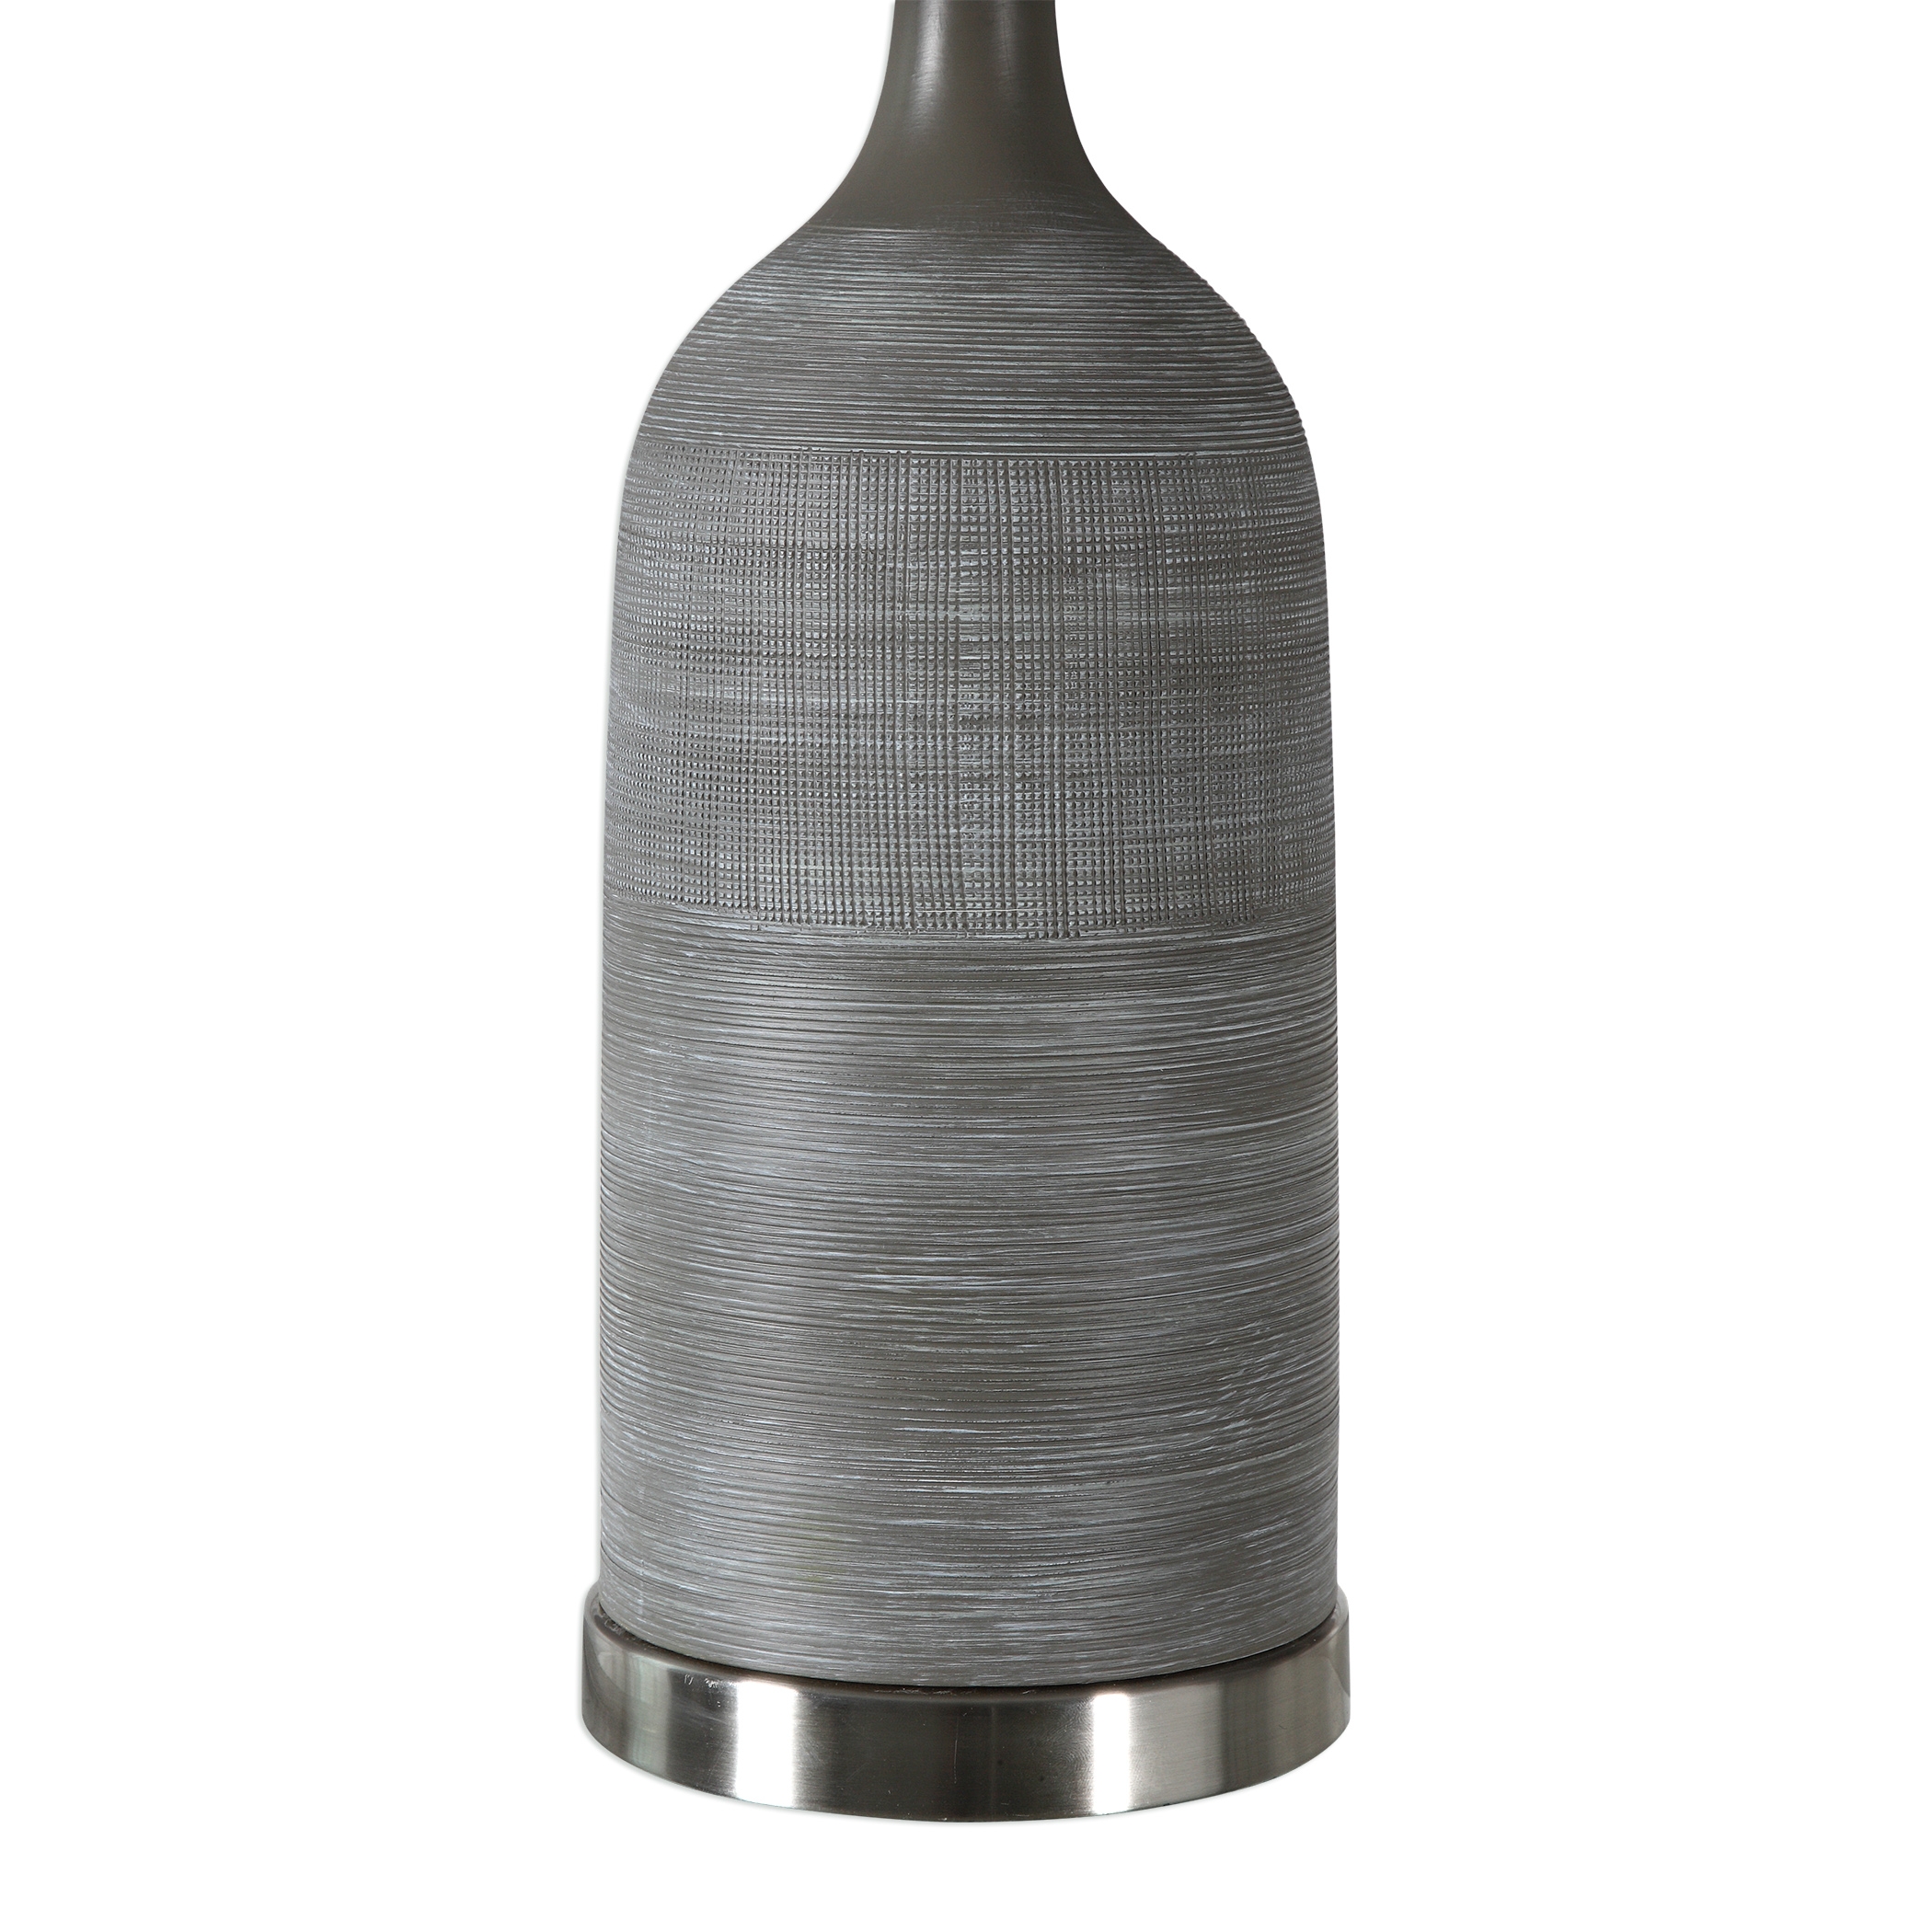 Olive Bronze Ceramic Table Lamp - Image 1